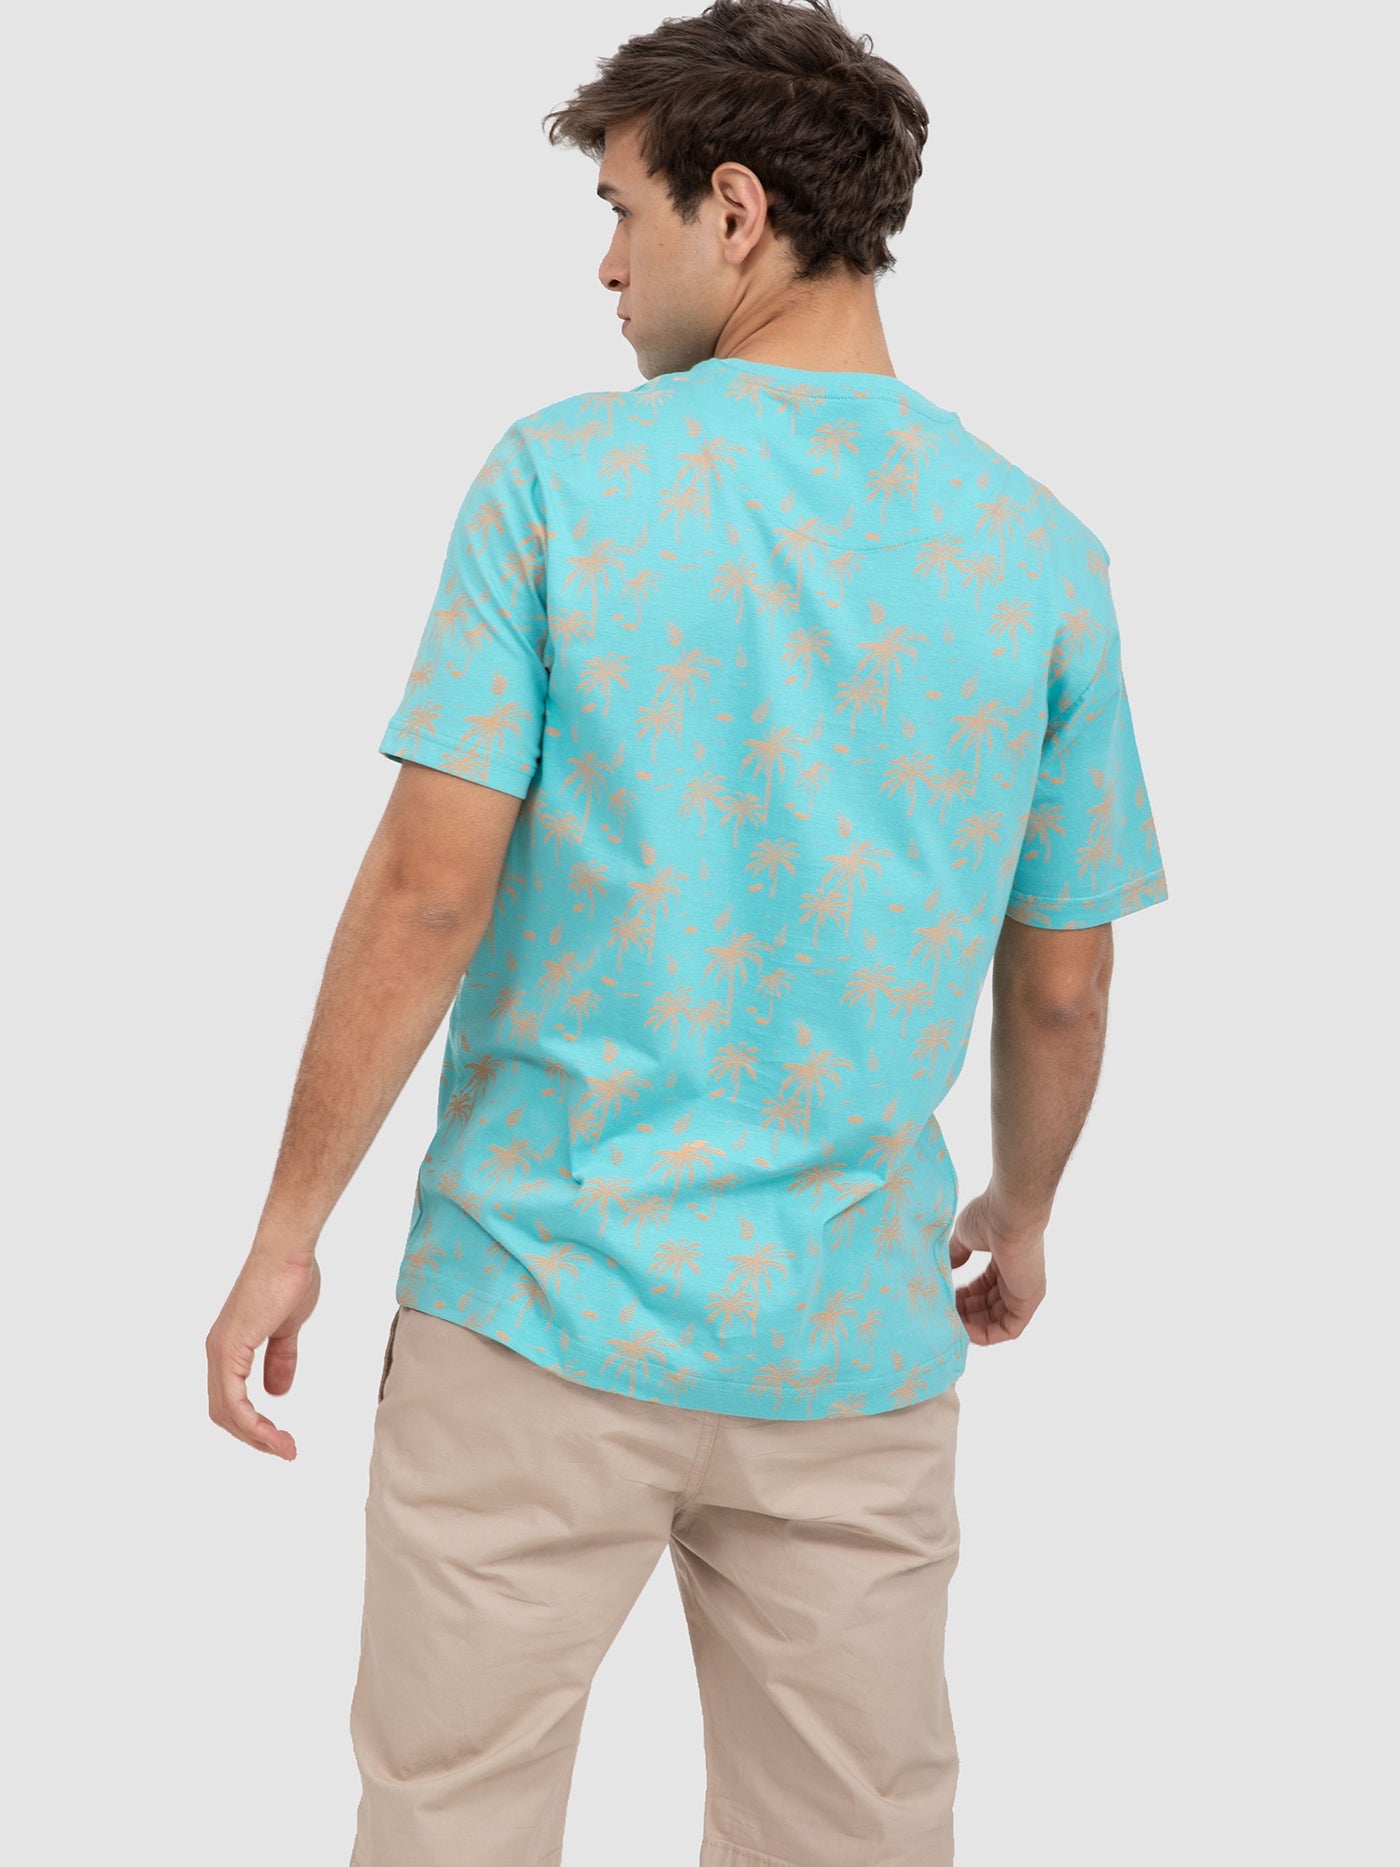 Premoda Mens All-Over Palms Printed T-Shirt